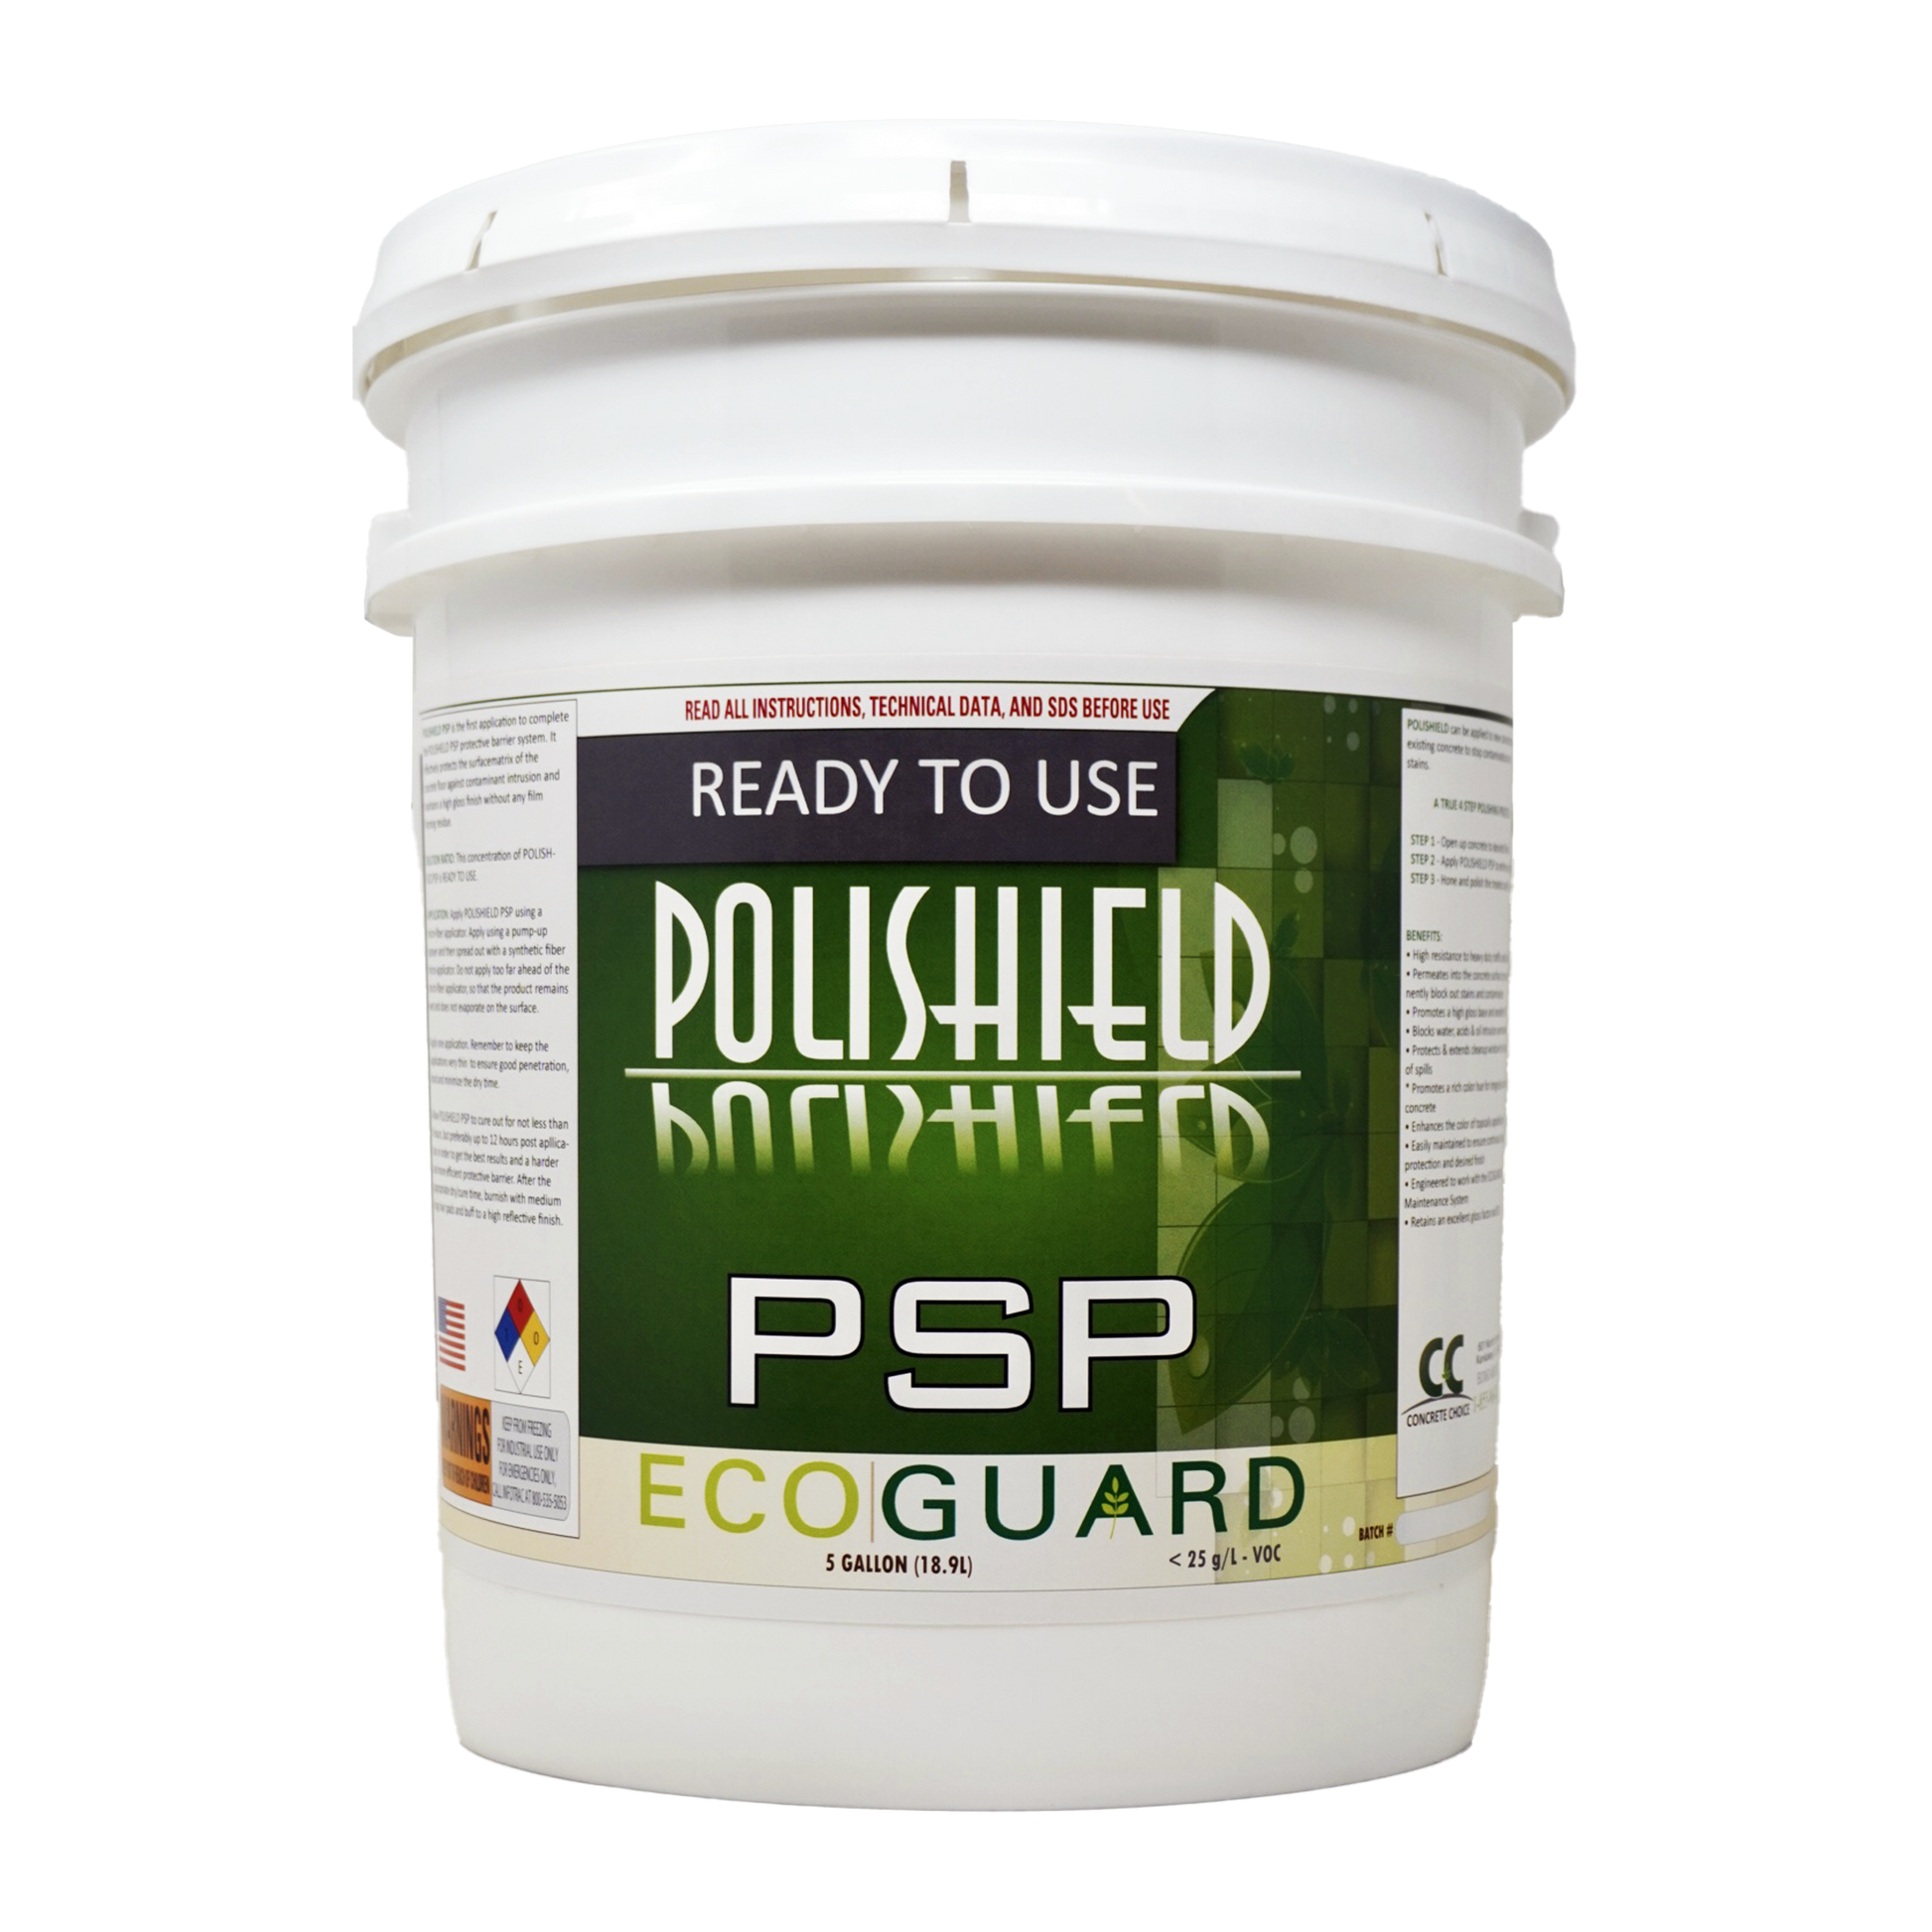 Ecoguard Polishield